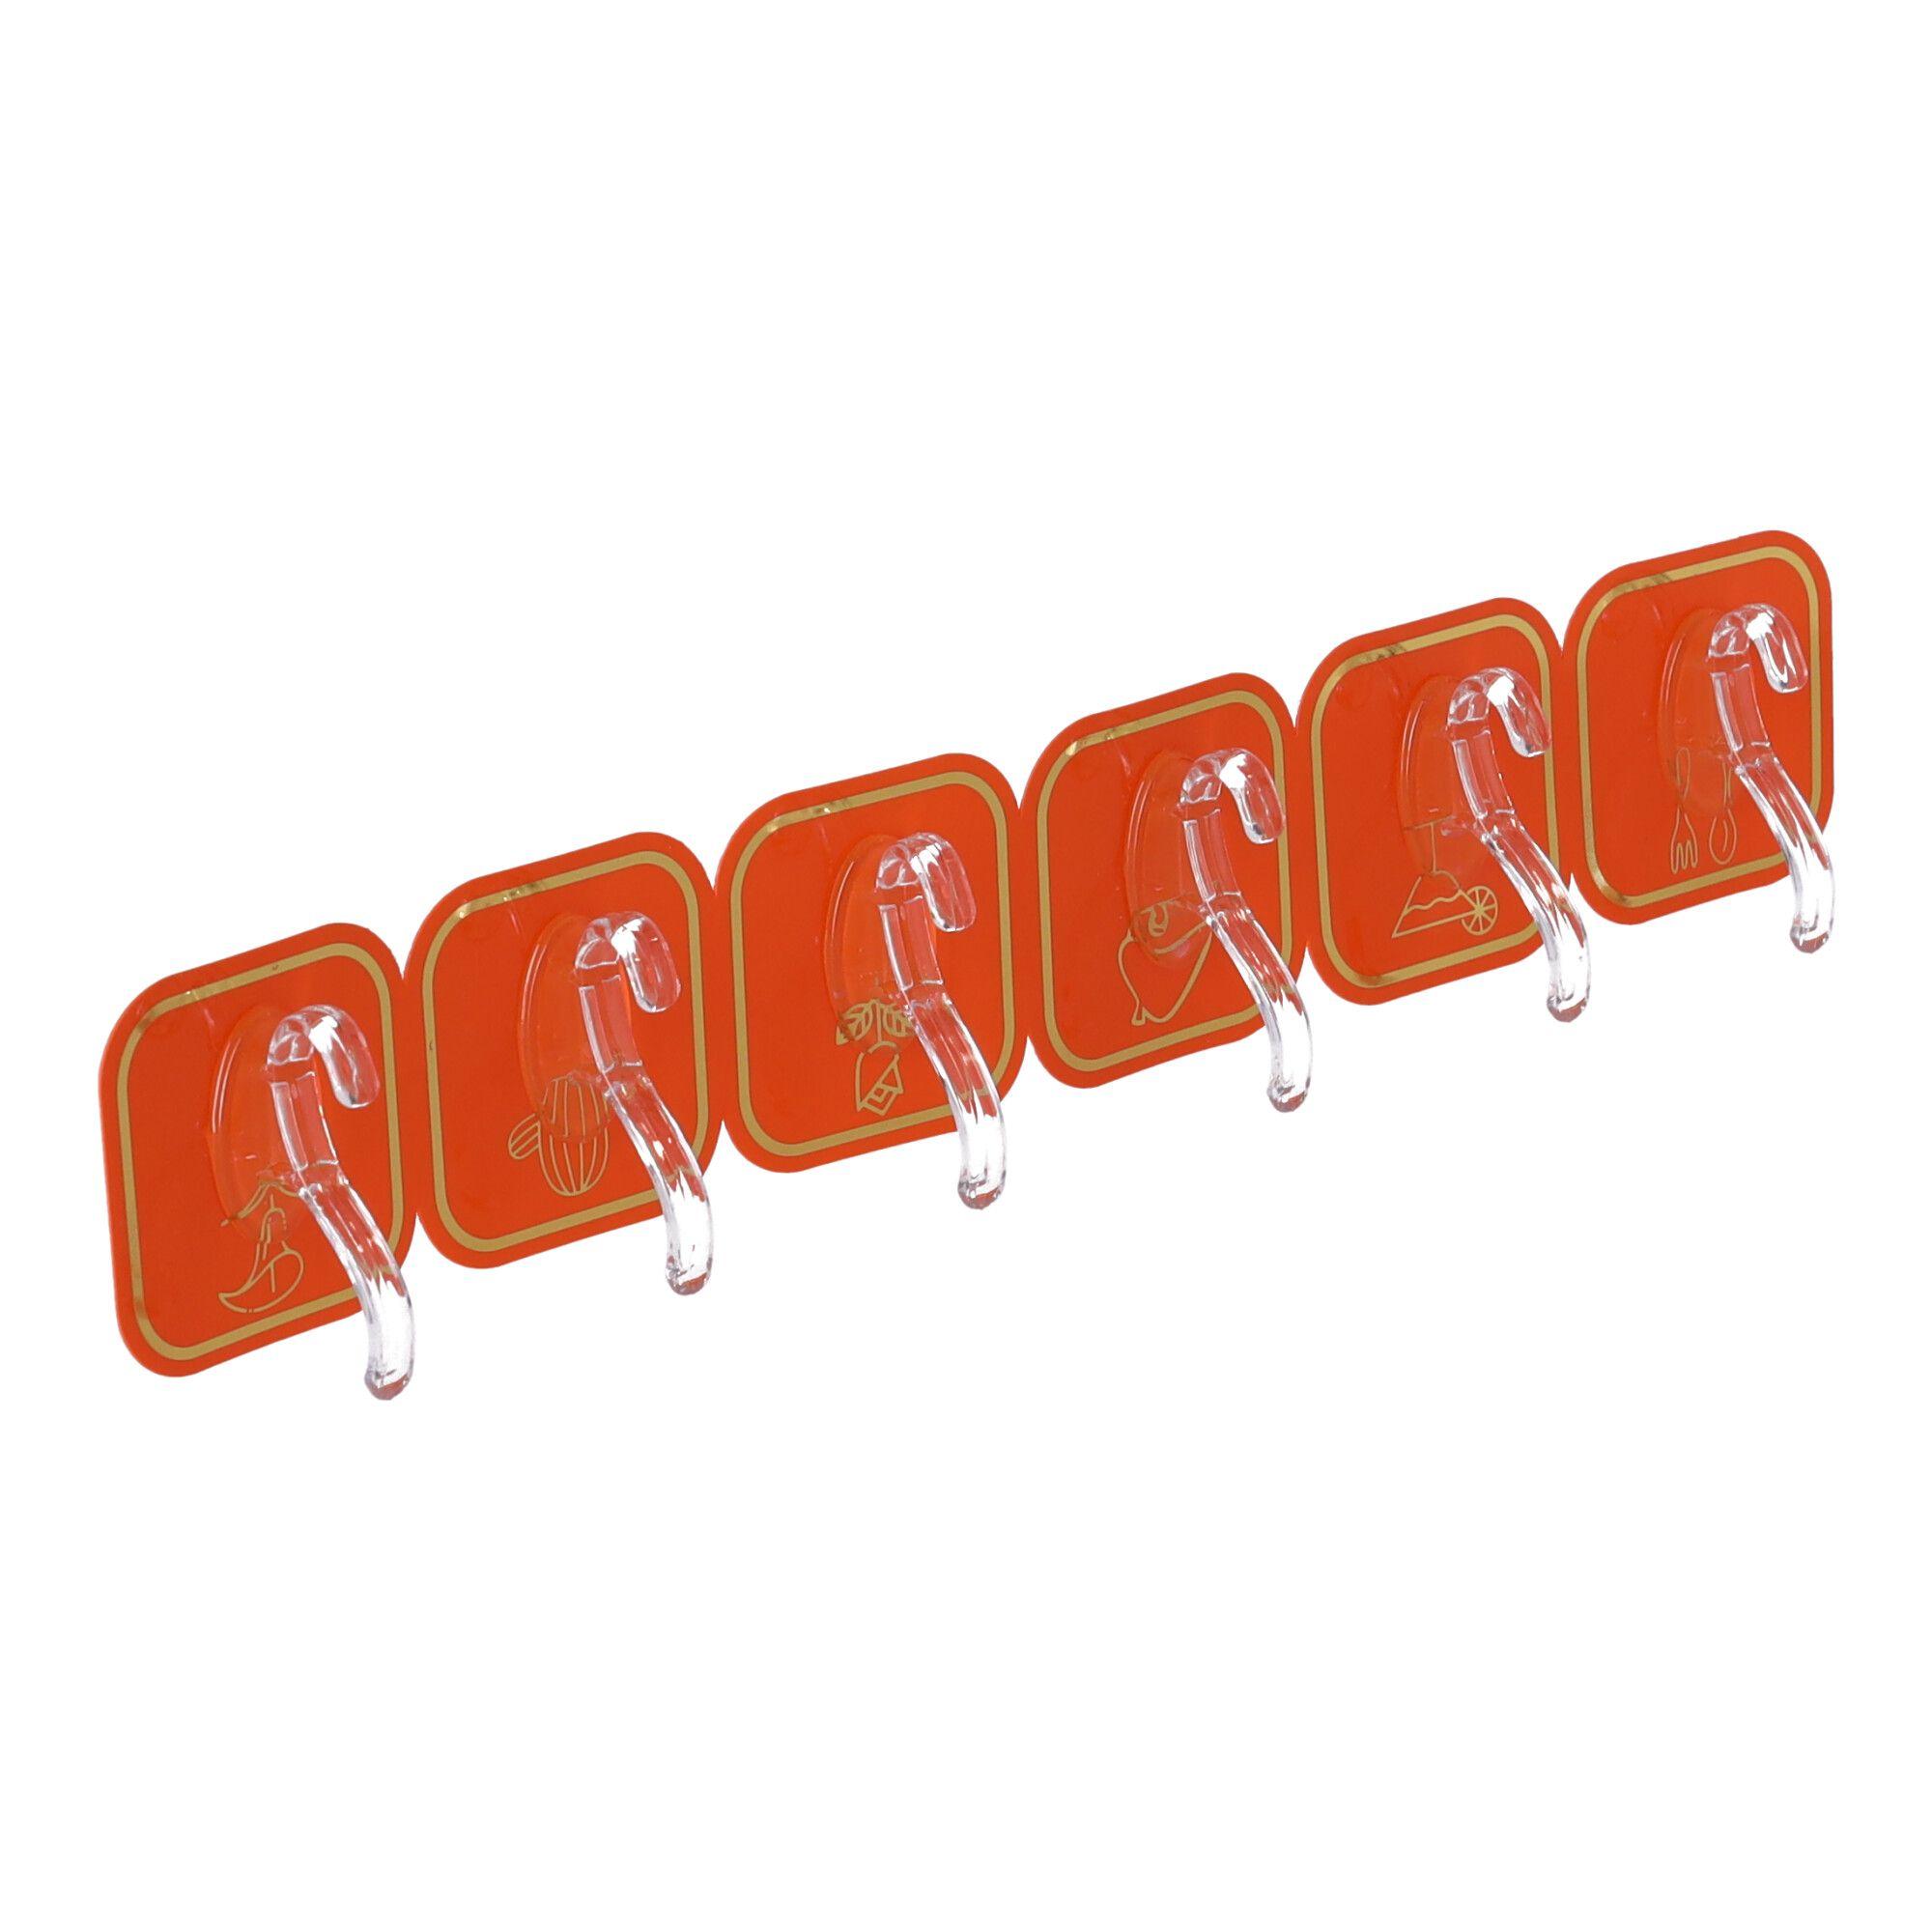 Self-adhesive hooks 6 pieces - orange